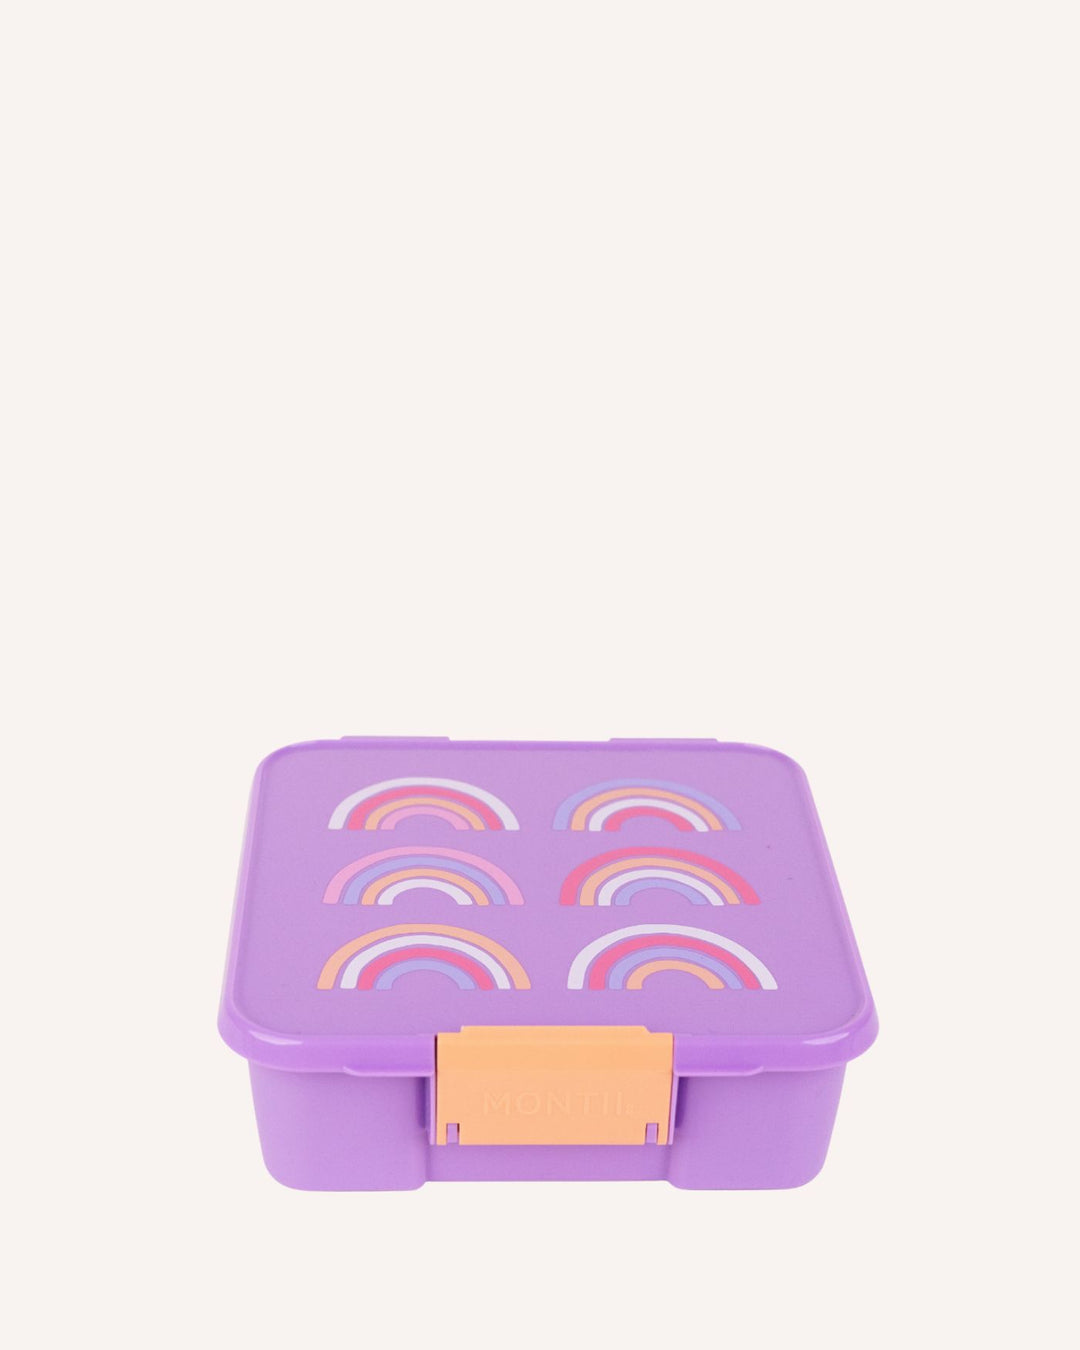 MontiiCo Bento Five Lunch Box - Rainbow Roller